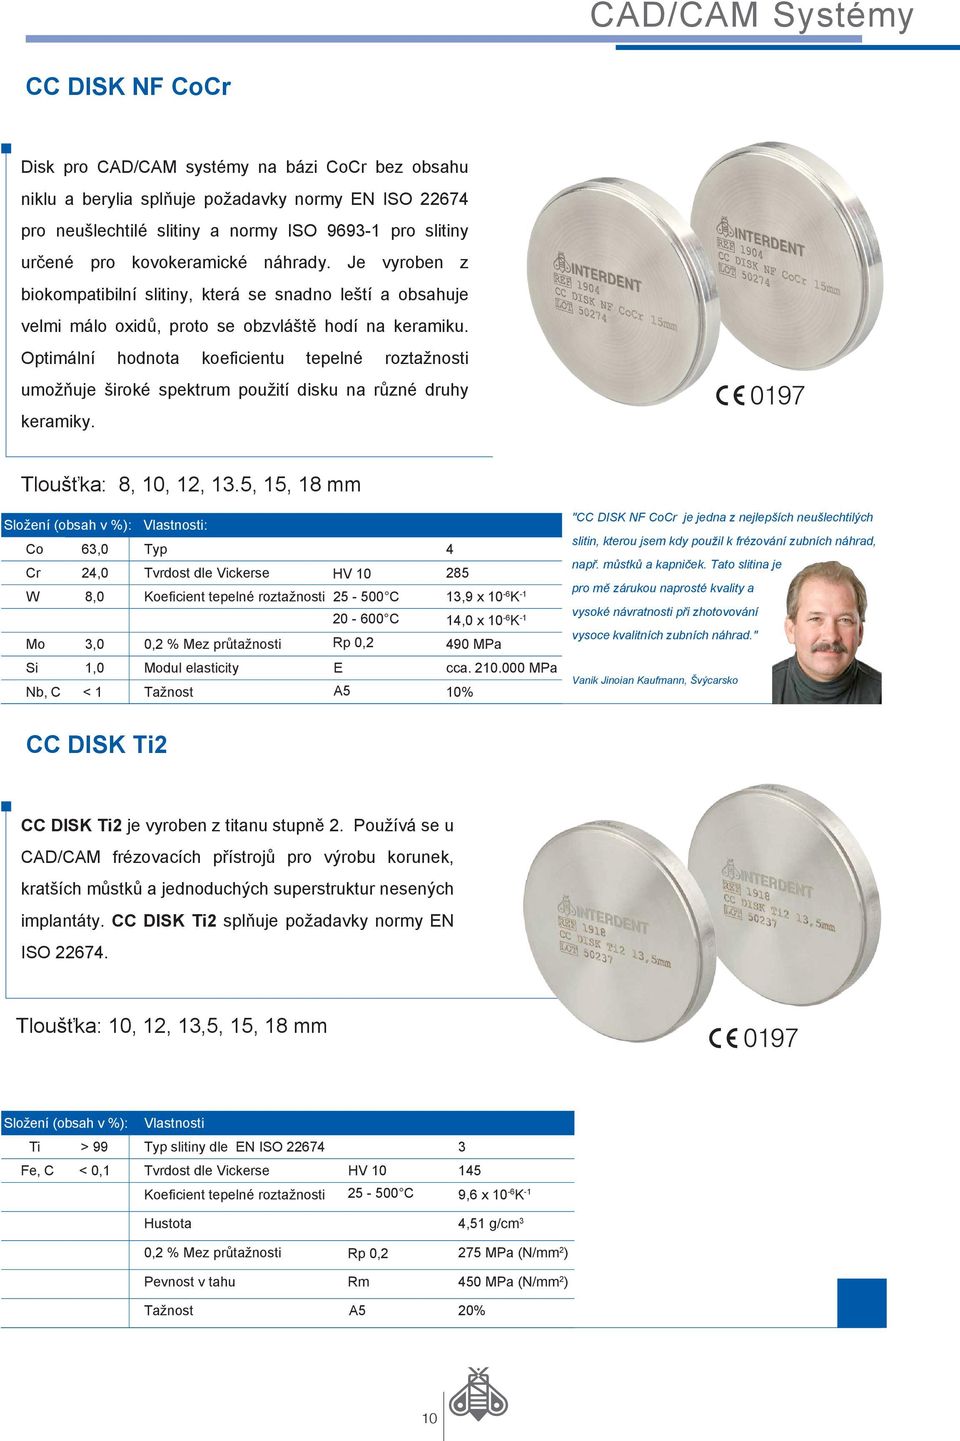 Optimální hodnota koeficientu tepelné roztažnosti umožňuje široké spektrum použití disku na různé druhy keramiky. Tloušťka: 8, 10, 12, 13.